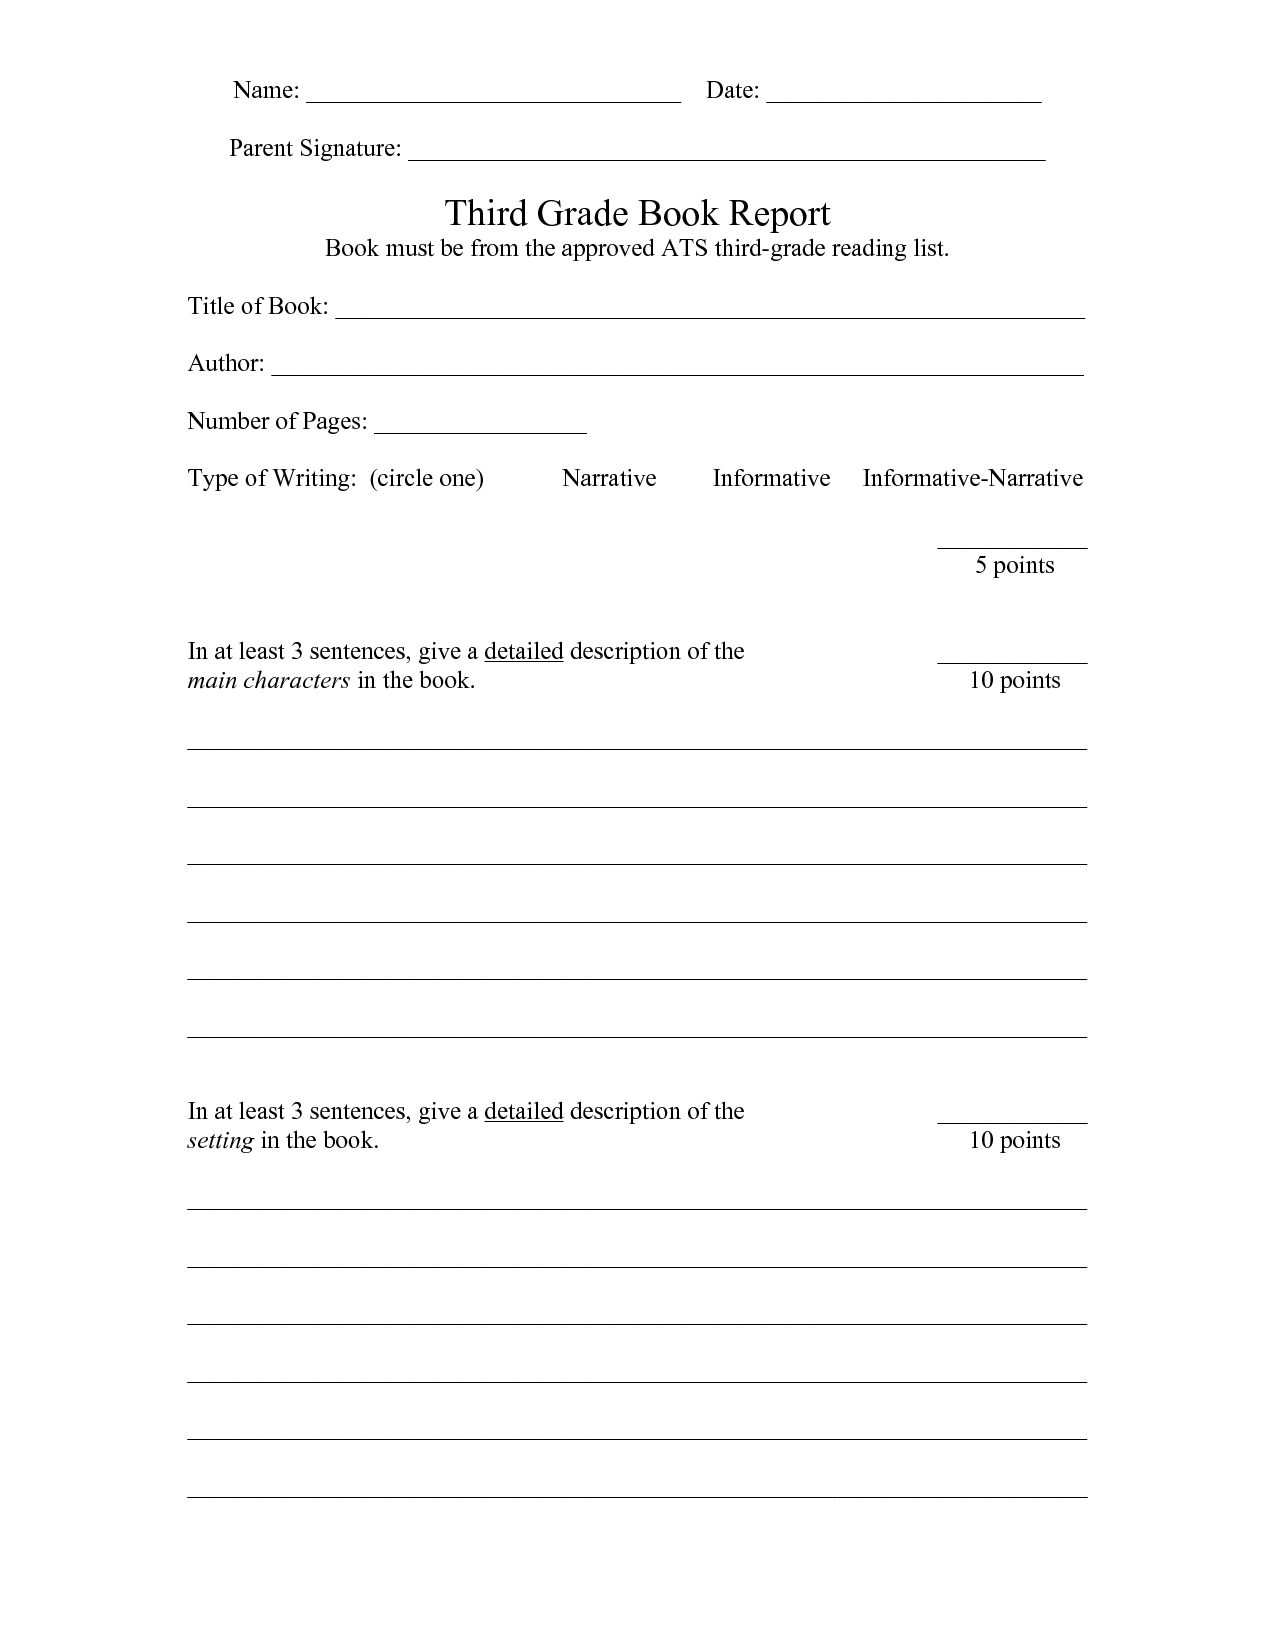 Custom Essay Papers $7 | Online Report Writing Homework Regarding College Book Report Template